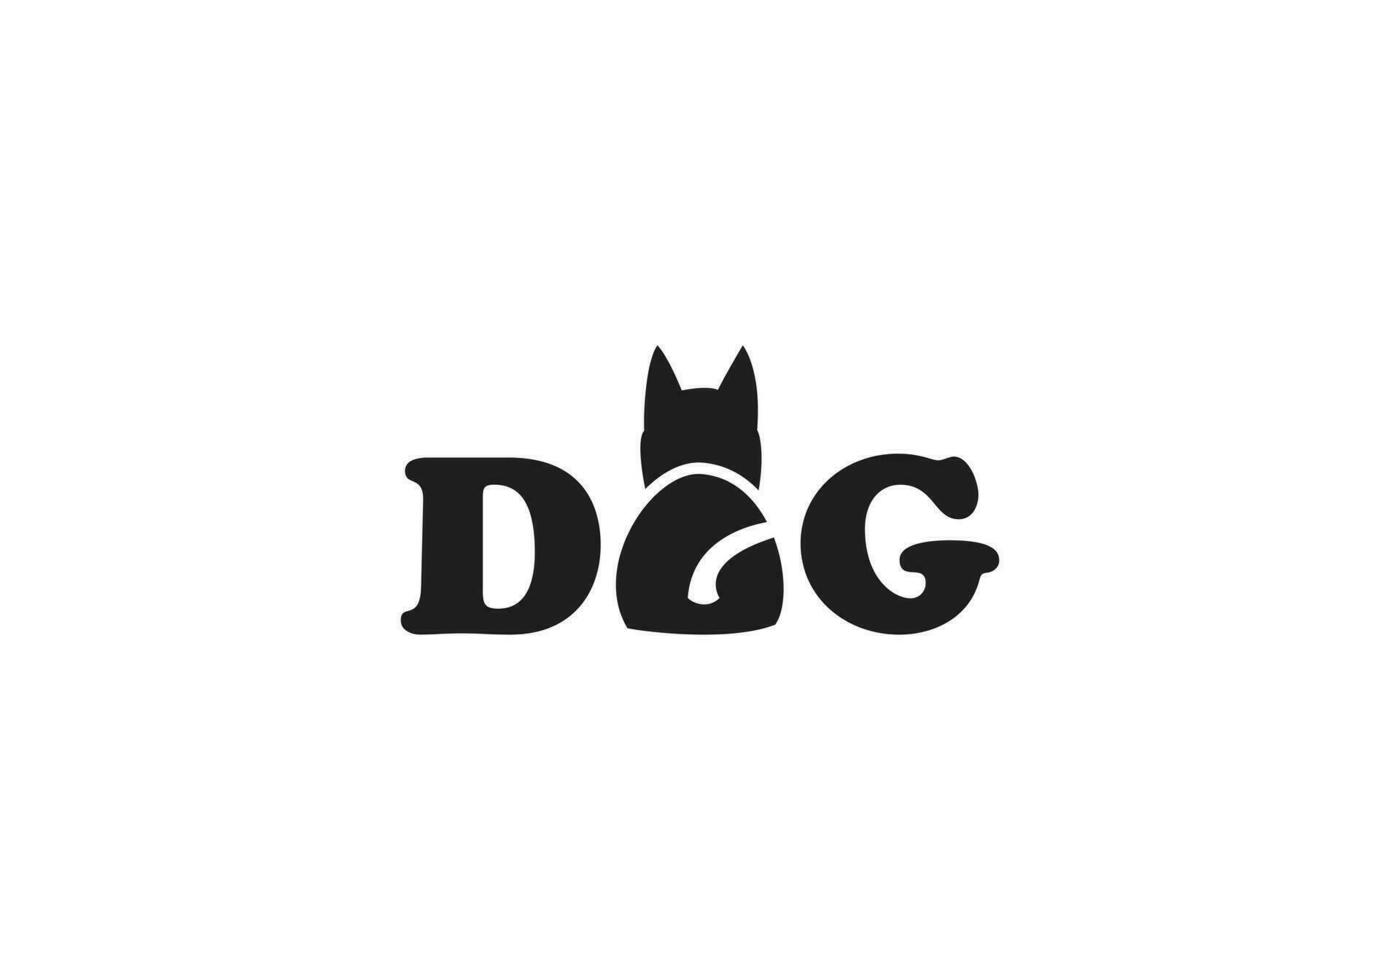 creative dog and text added animal logo icon design vector